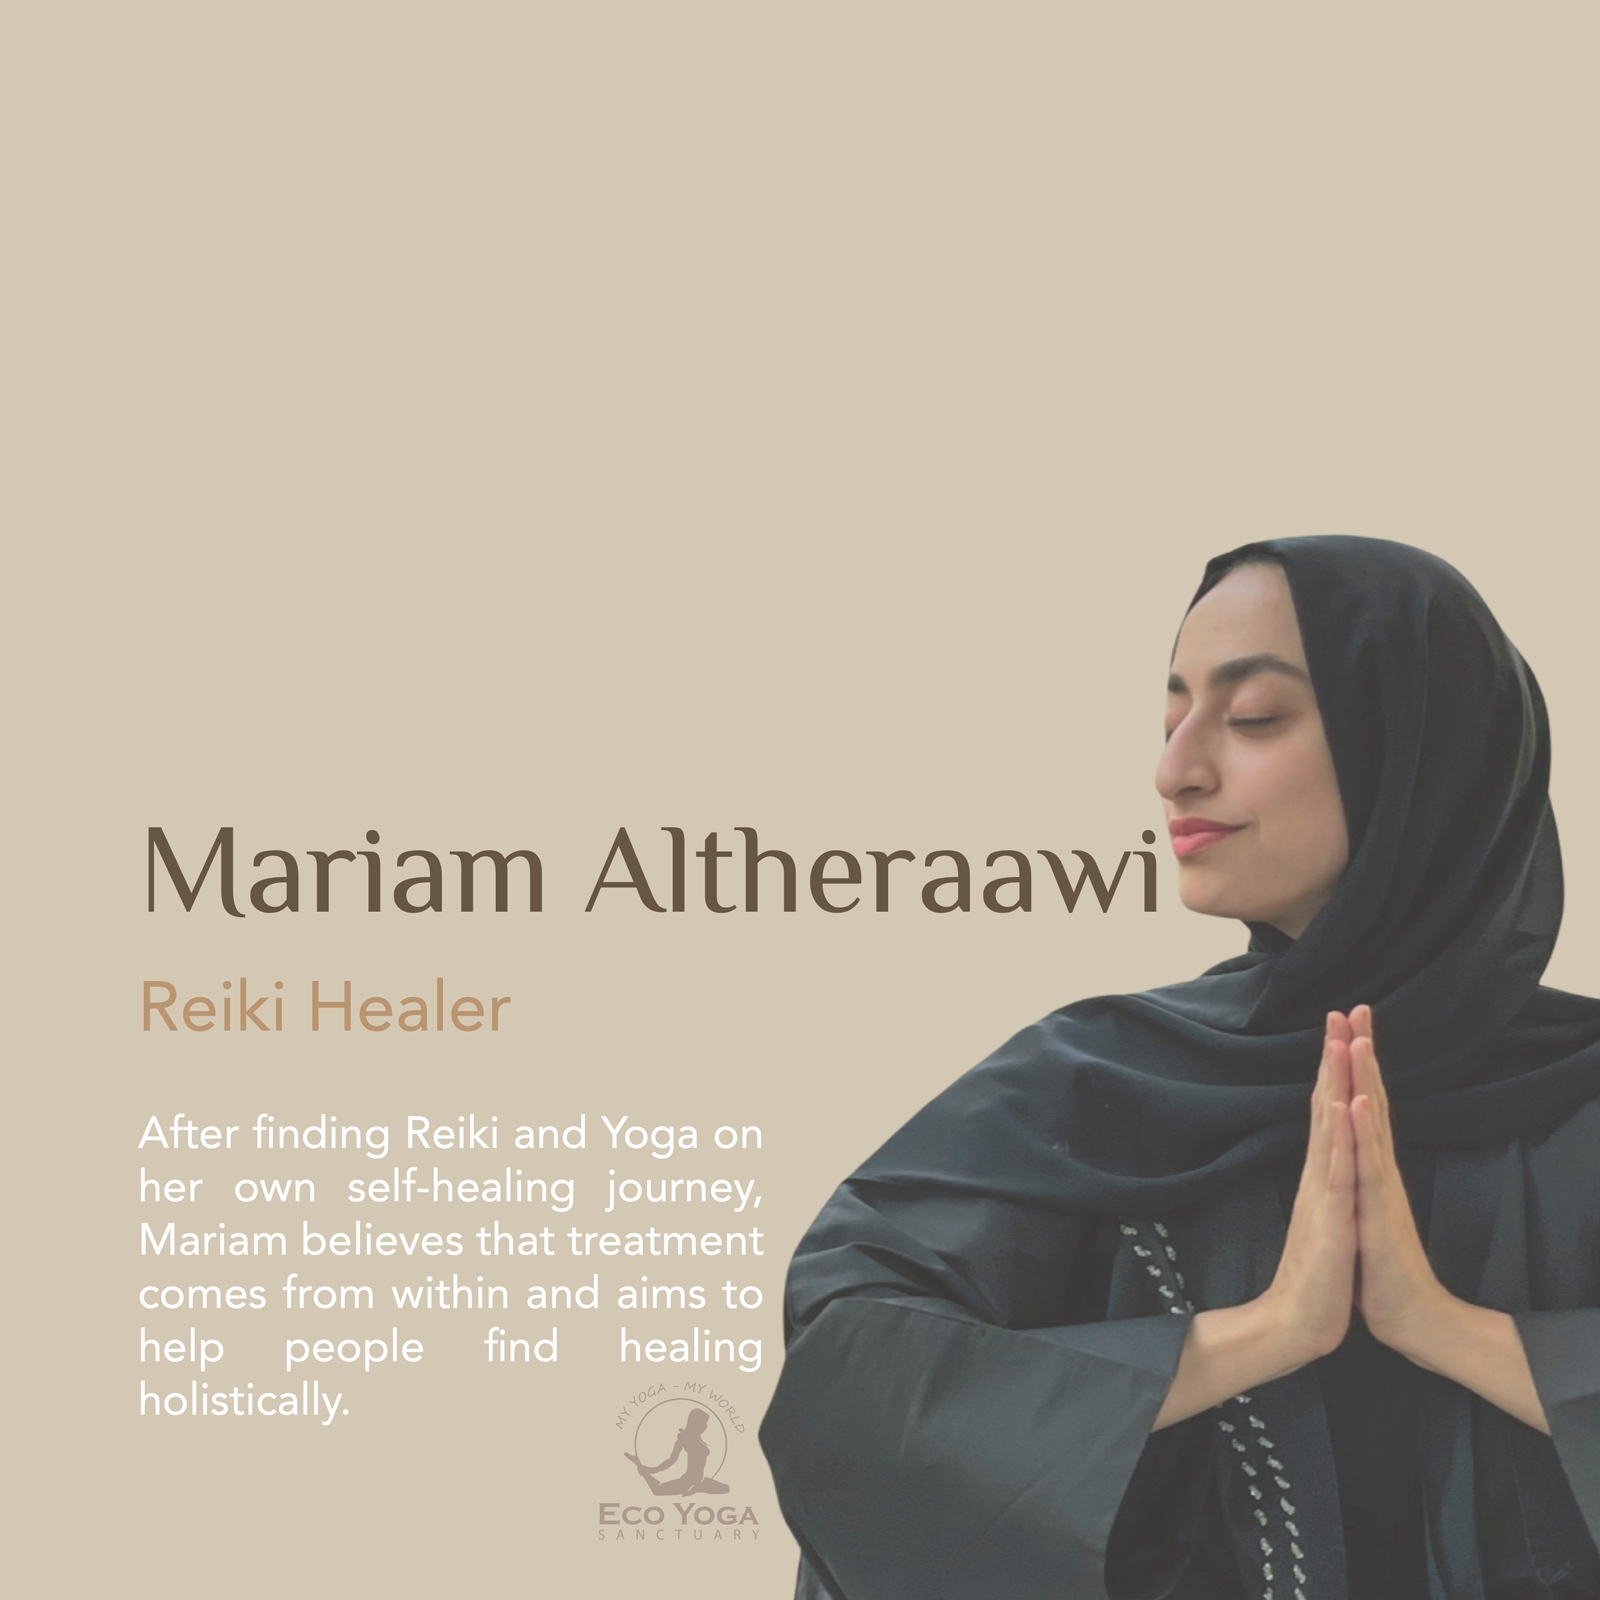 Healer Mariam